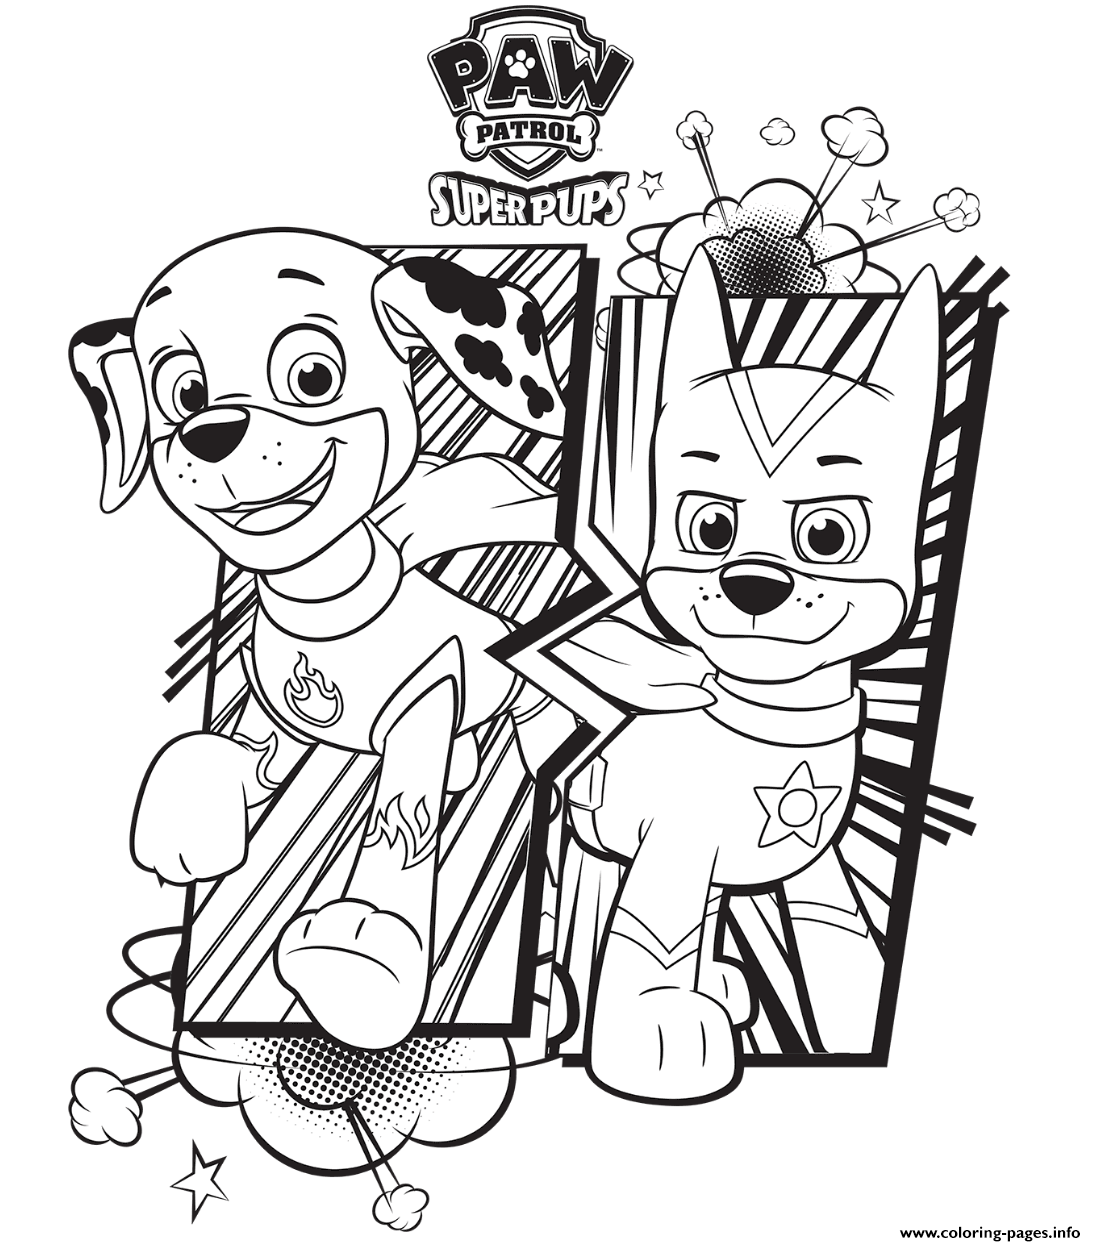 Paw Patrol Super Pups coloring pages Print Download 400 prints